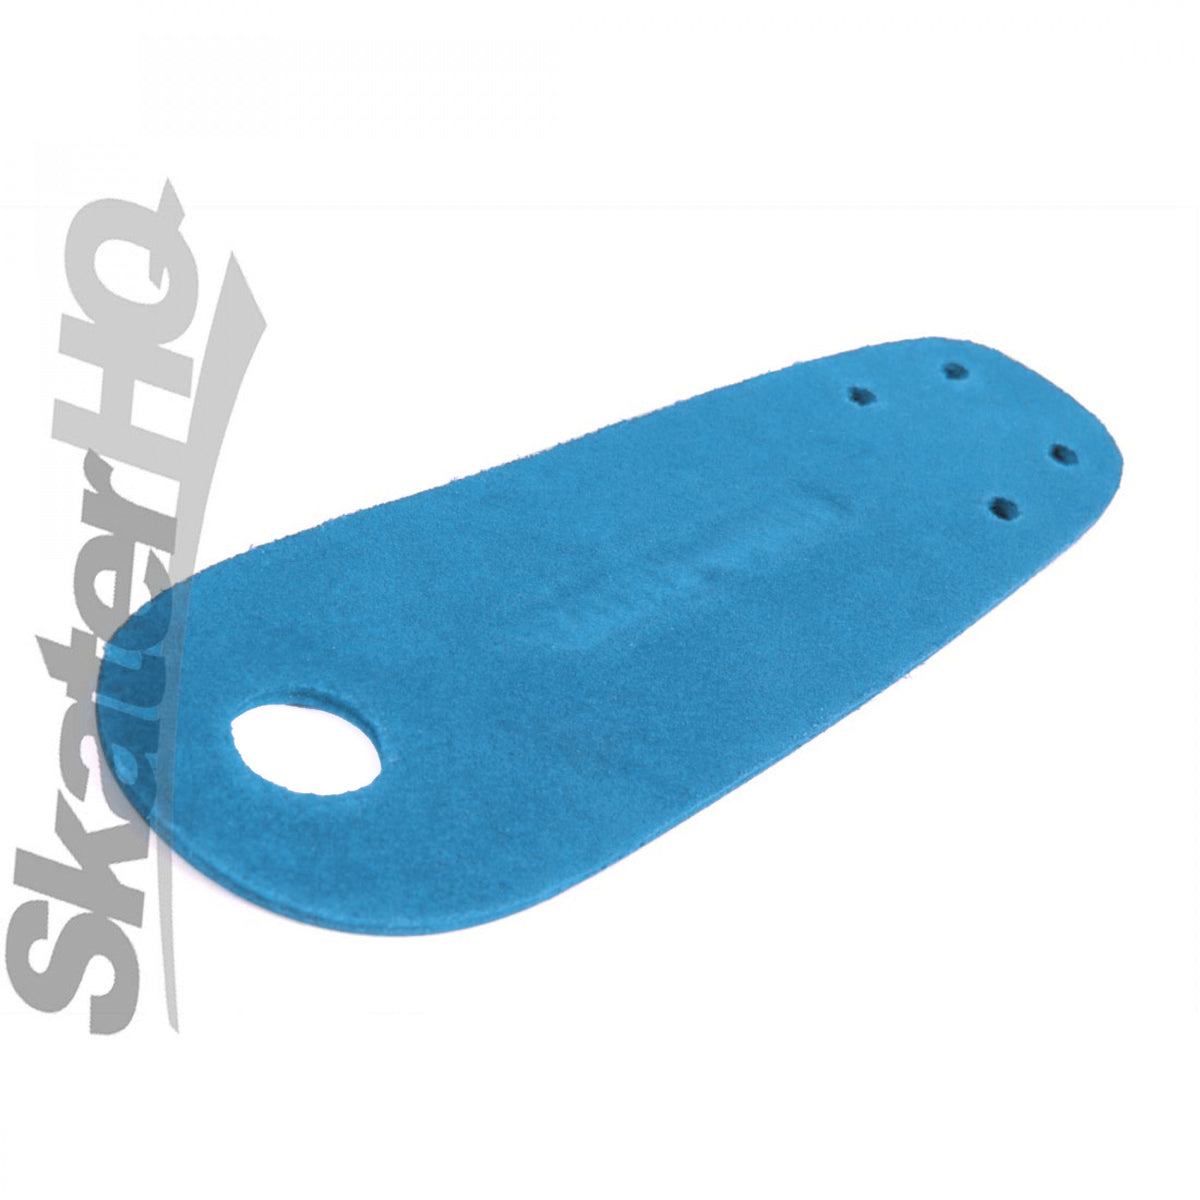 Sure-Grip Toe Guards - Light Blue Roller Skate Hardware and Parts